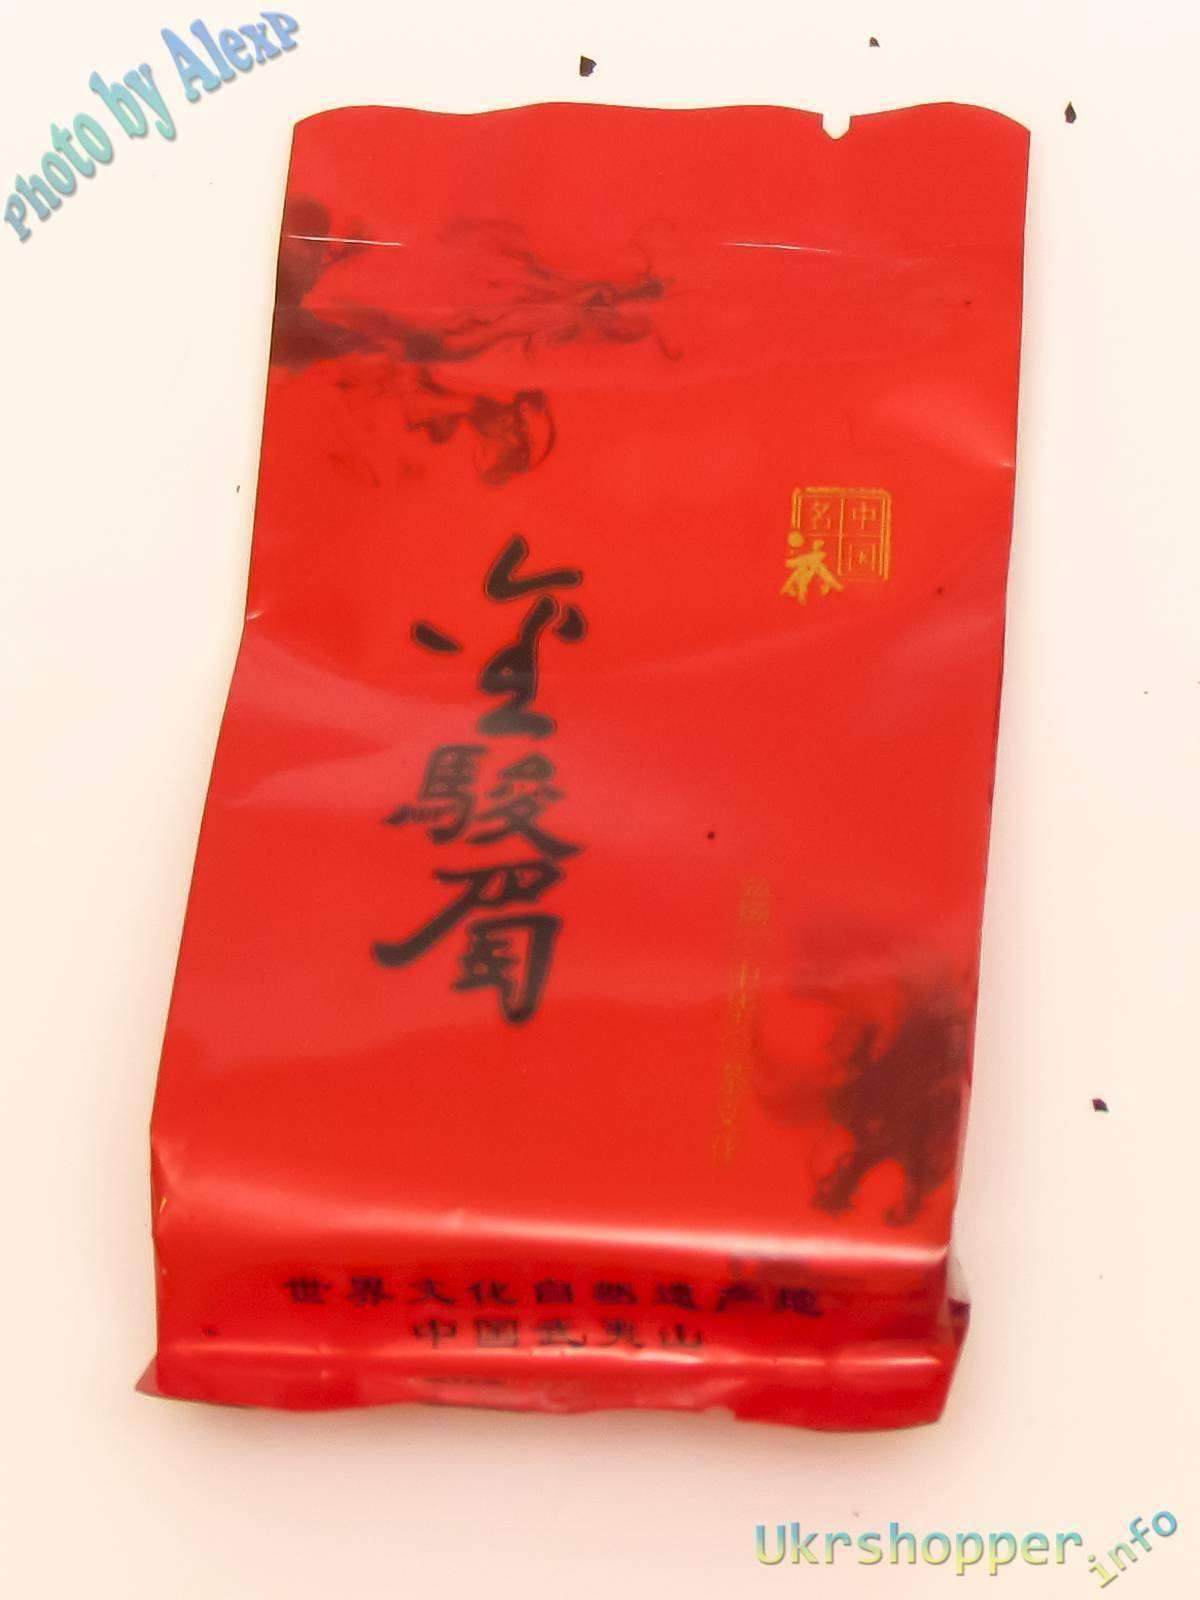 Aliexpress: Обзор недорогого китайского чая